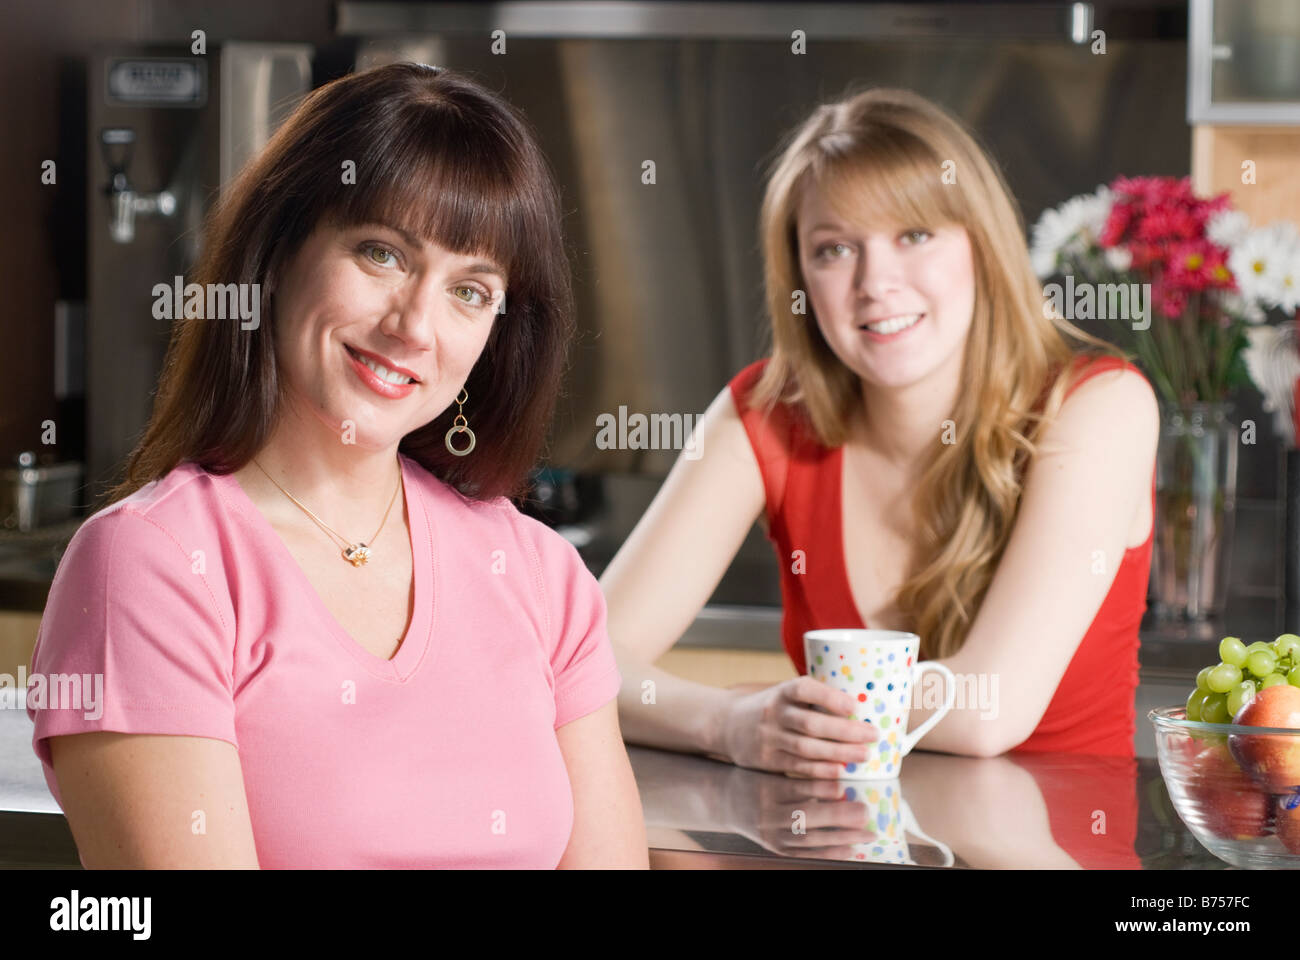 Two women seated in kitchen, Winnipeg, Canada Stock Photo